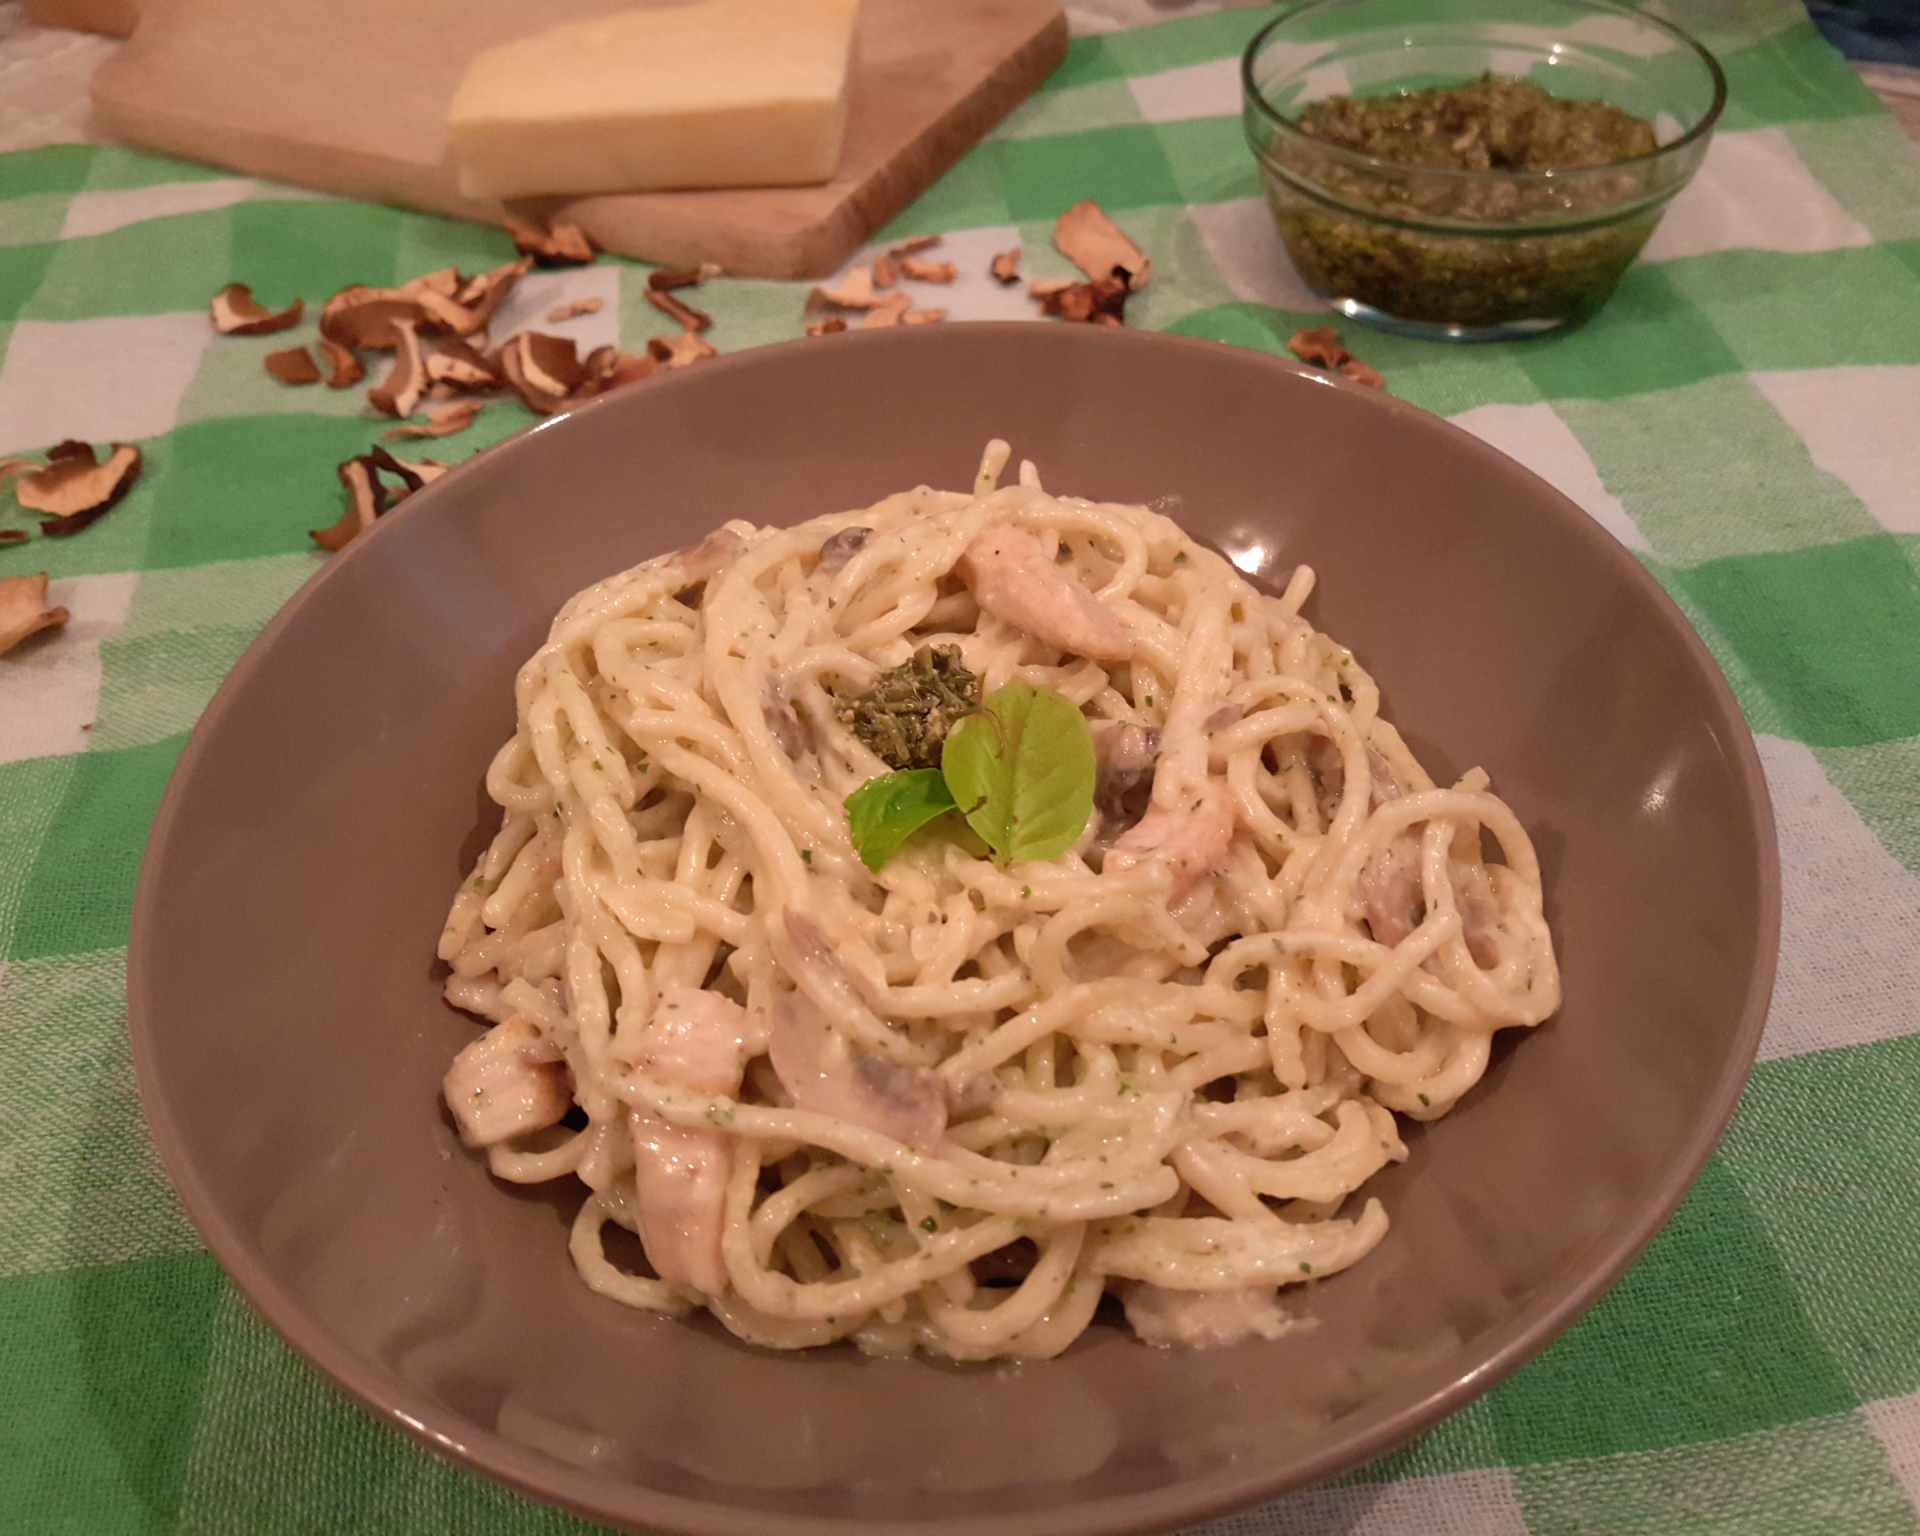 Špagety s bazalkovým pestom s hubami ozdobené čerstvou bazalkou.